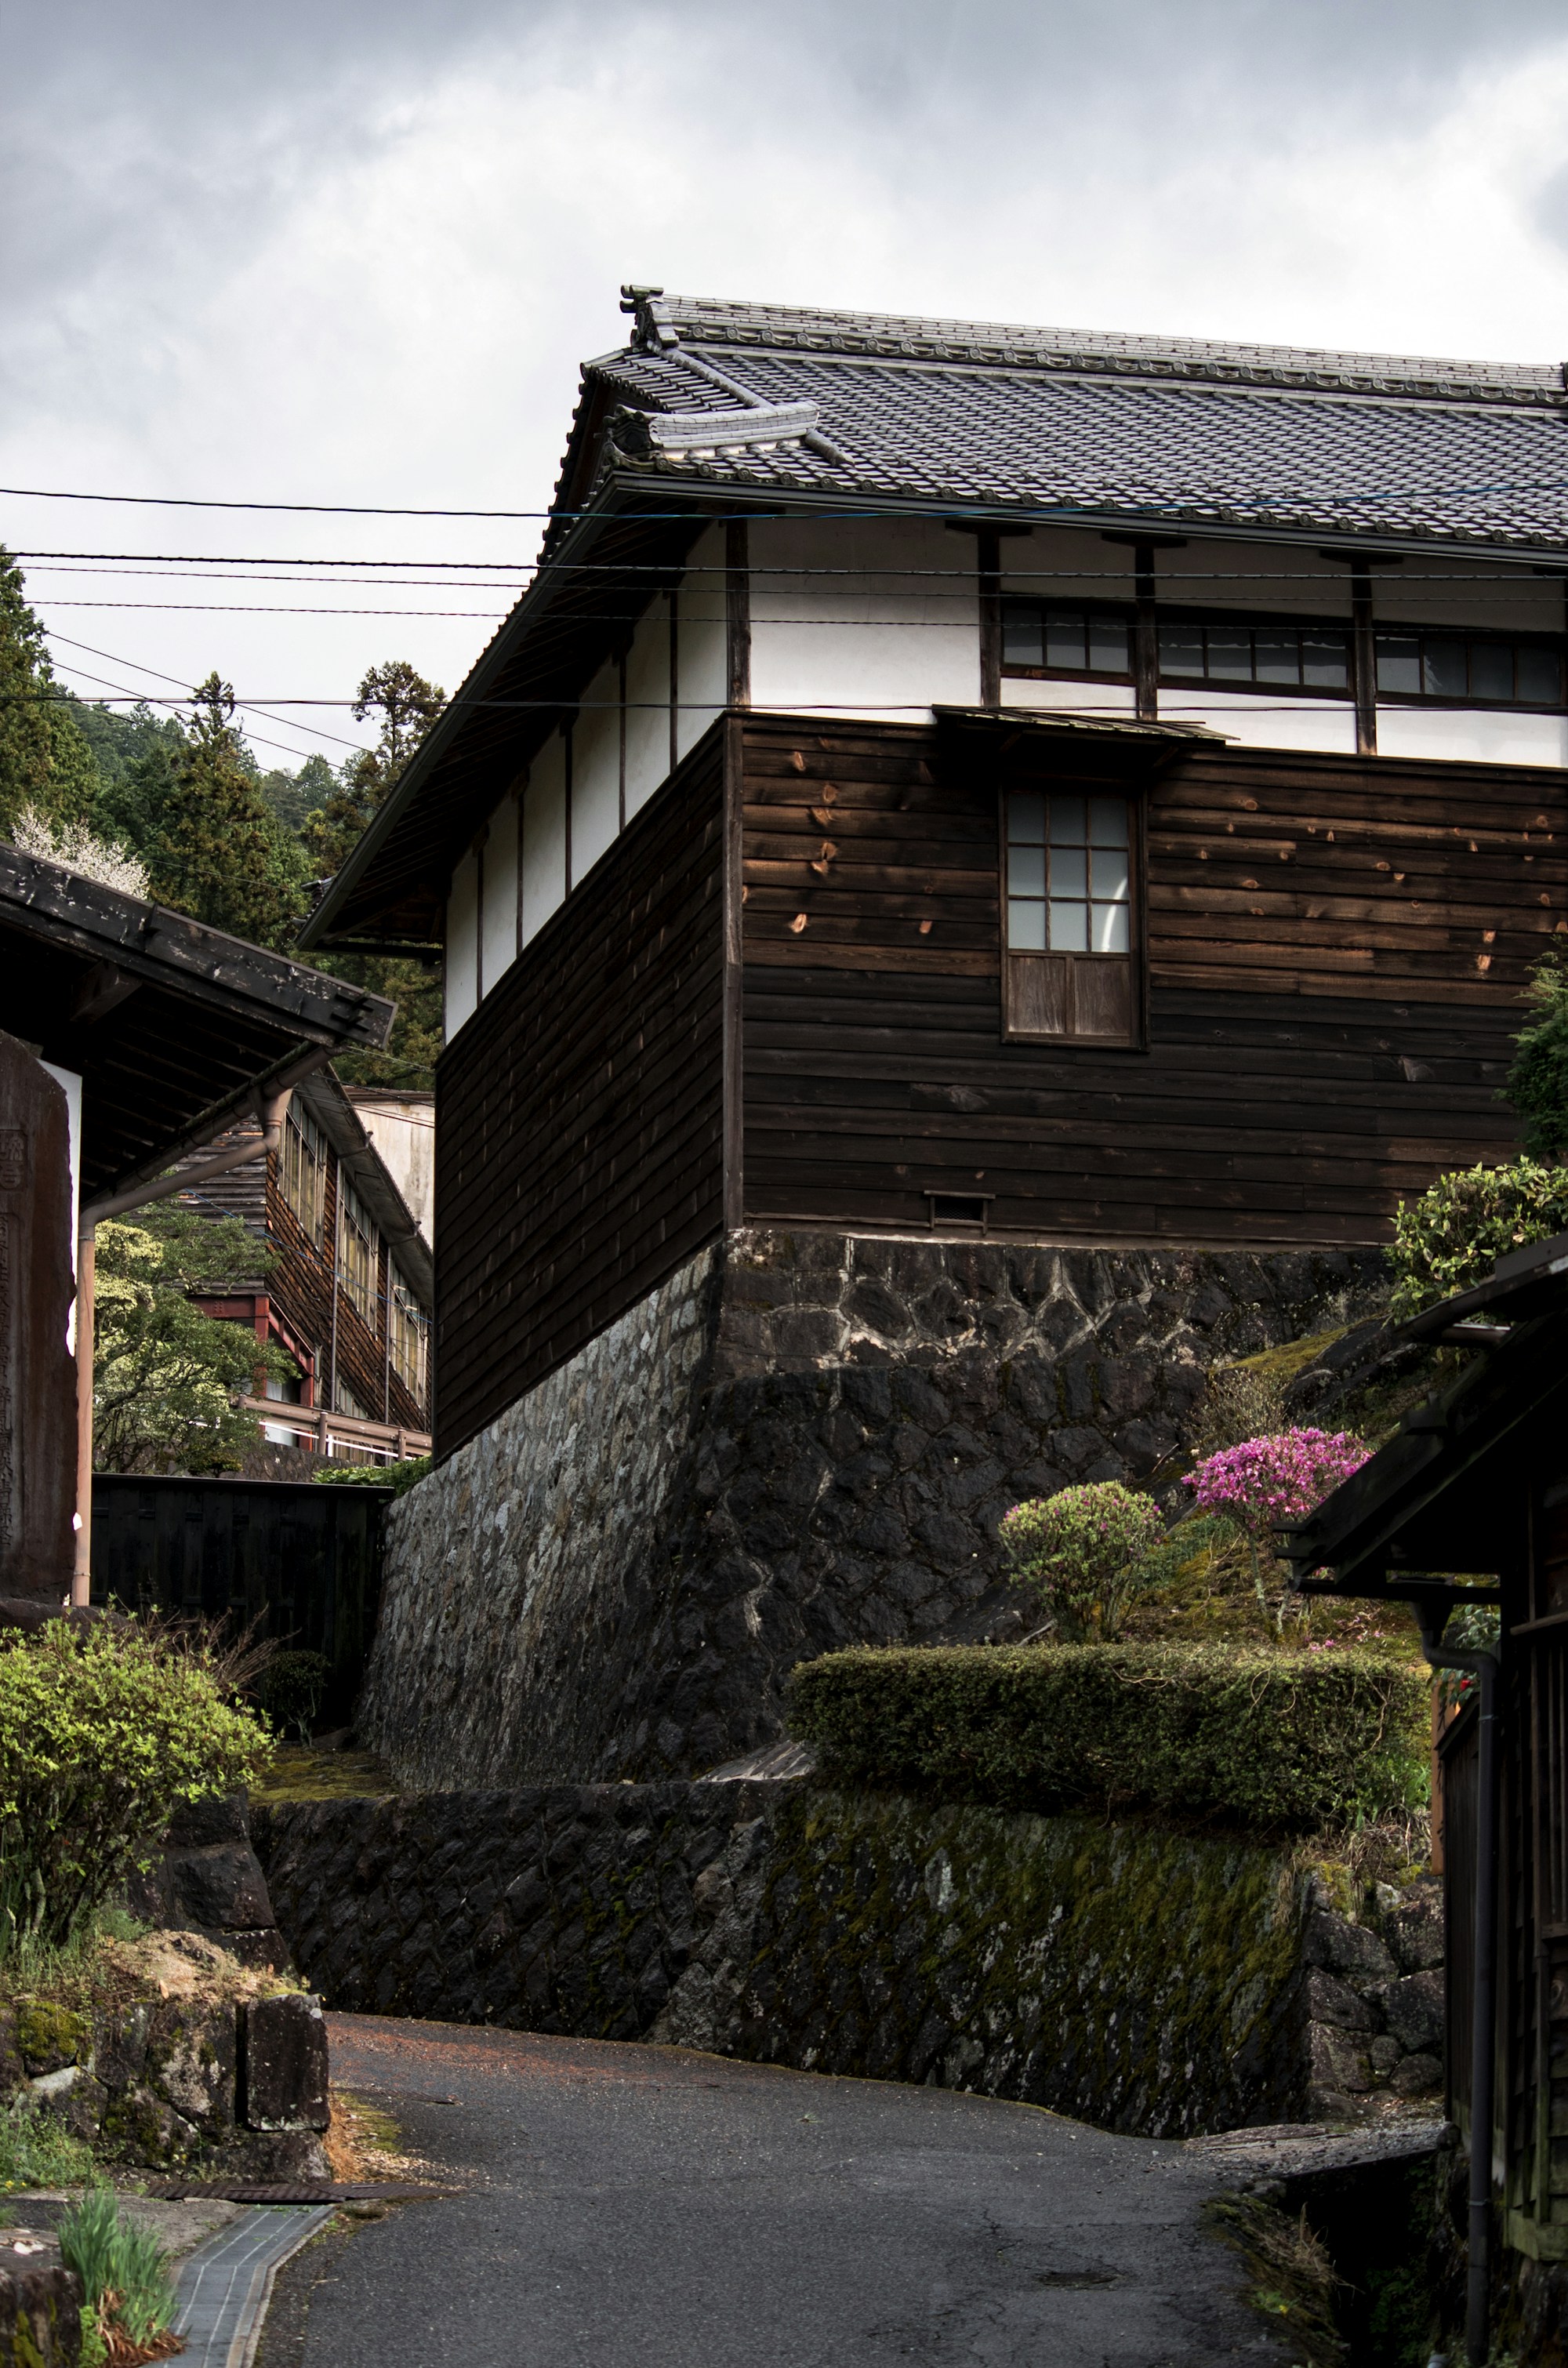 Exploring Tsumago: A Serene Village in Japan